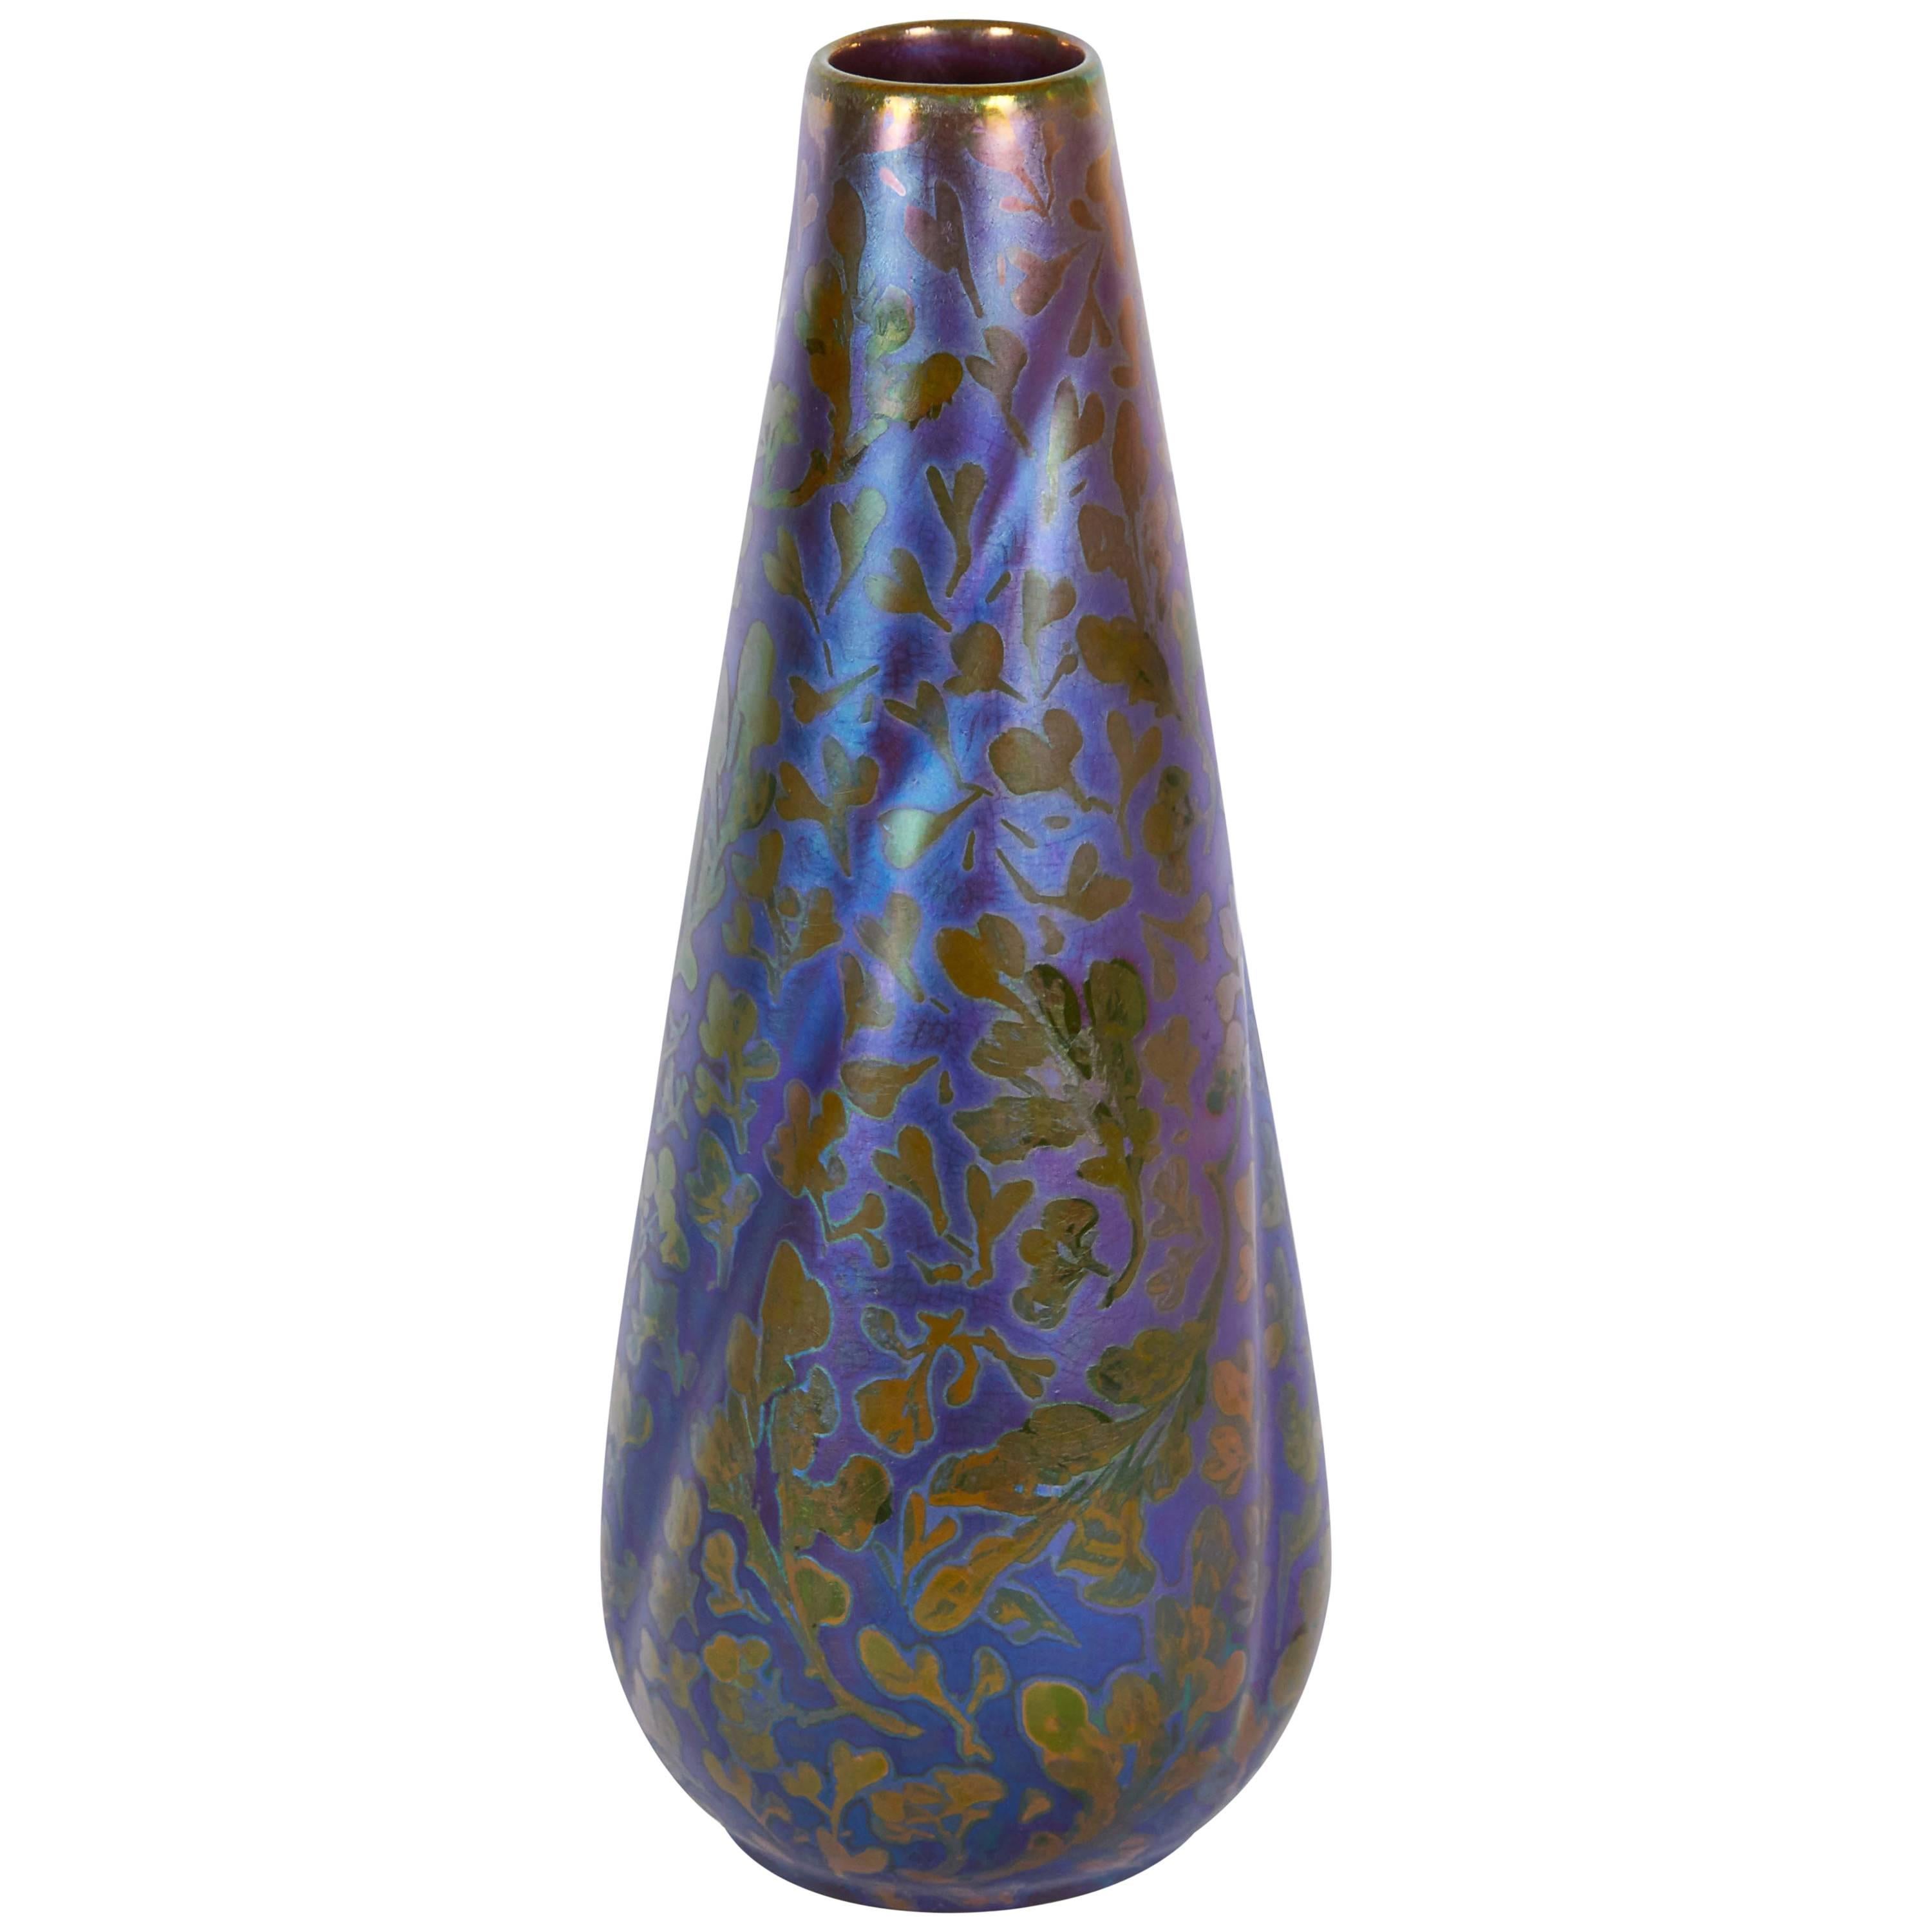 Jacques Sicard Art Nouveau Luster Glaze Vase for Weller Pottery